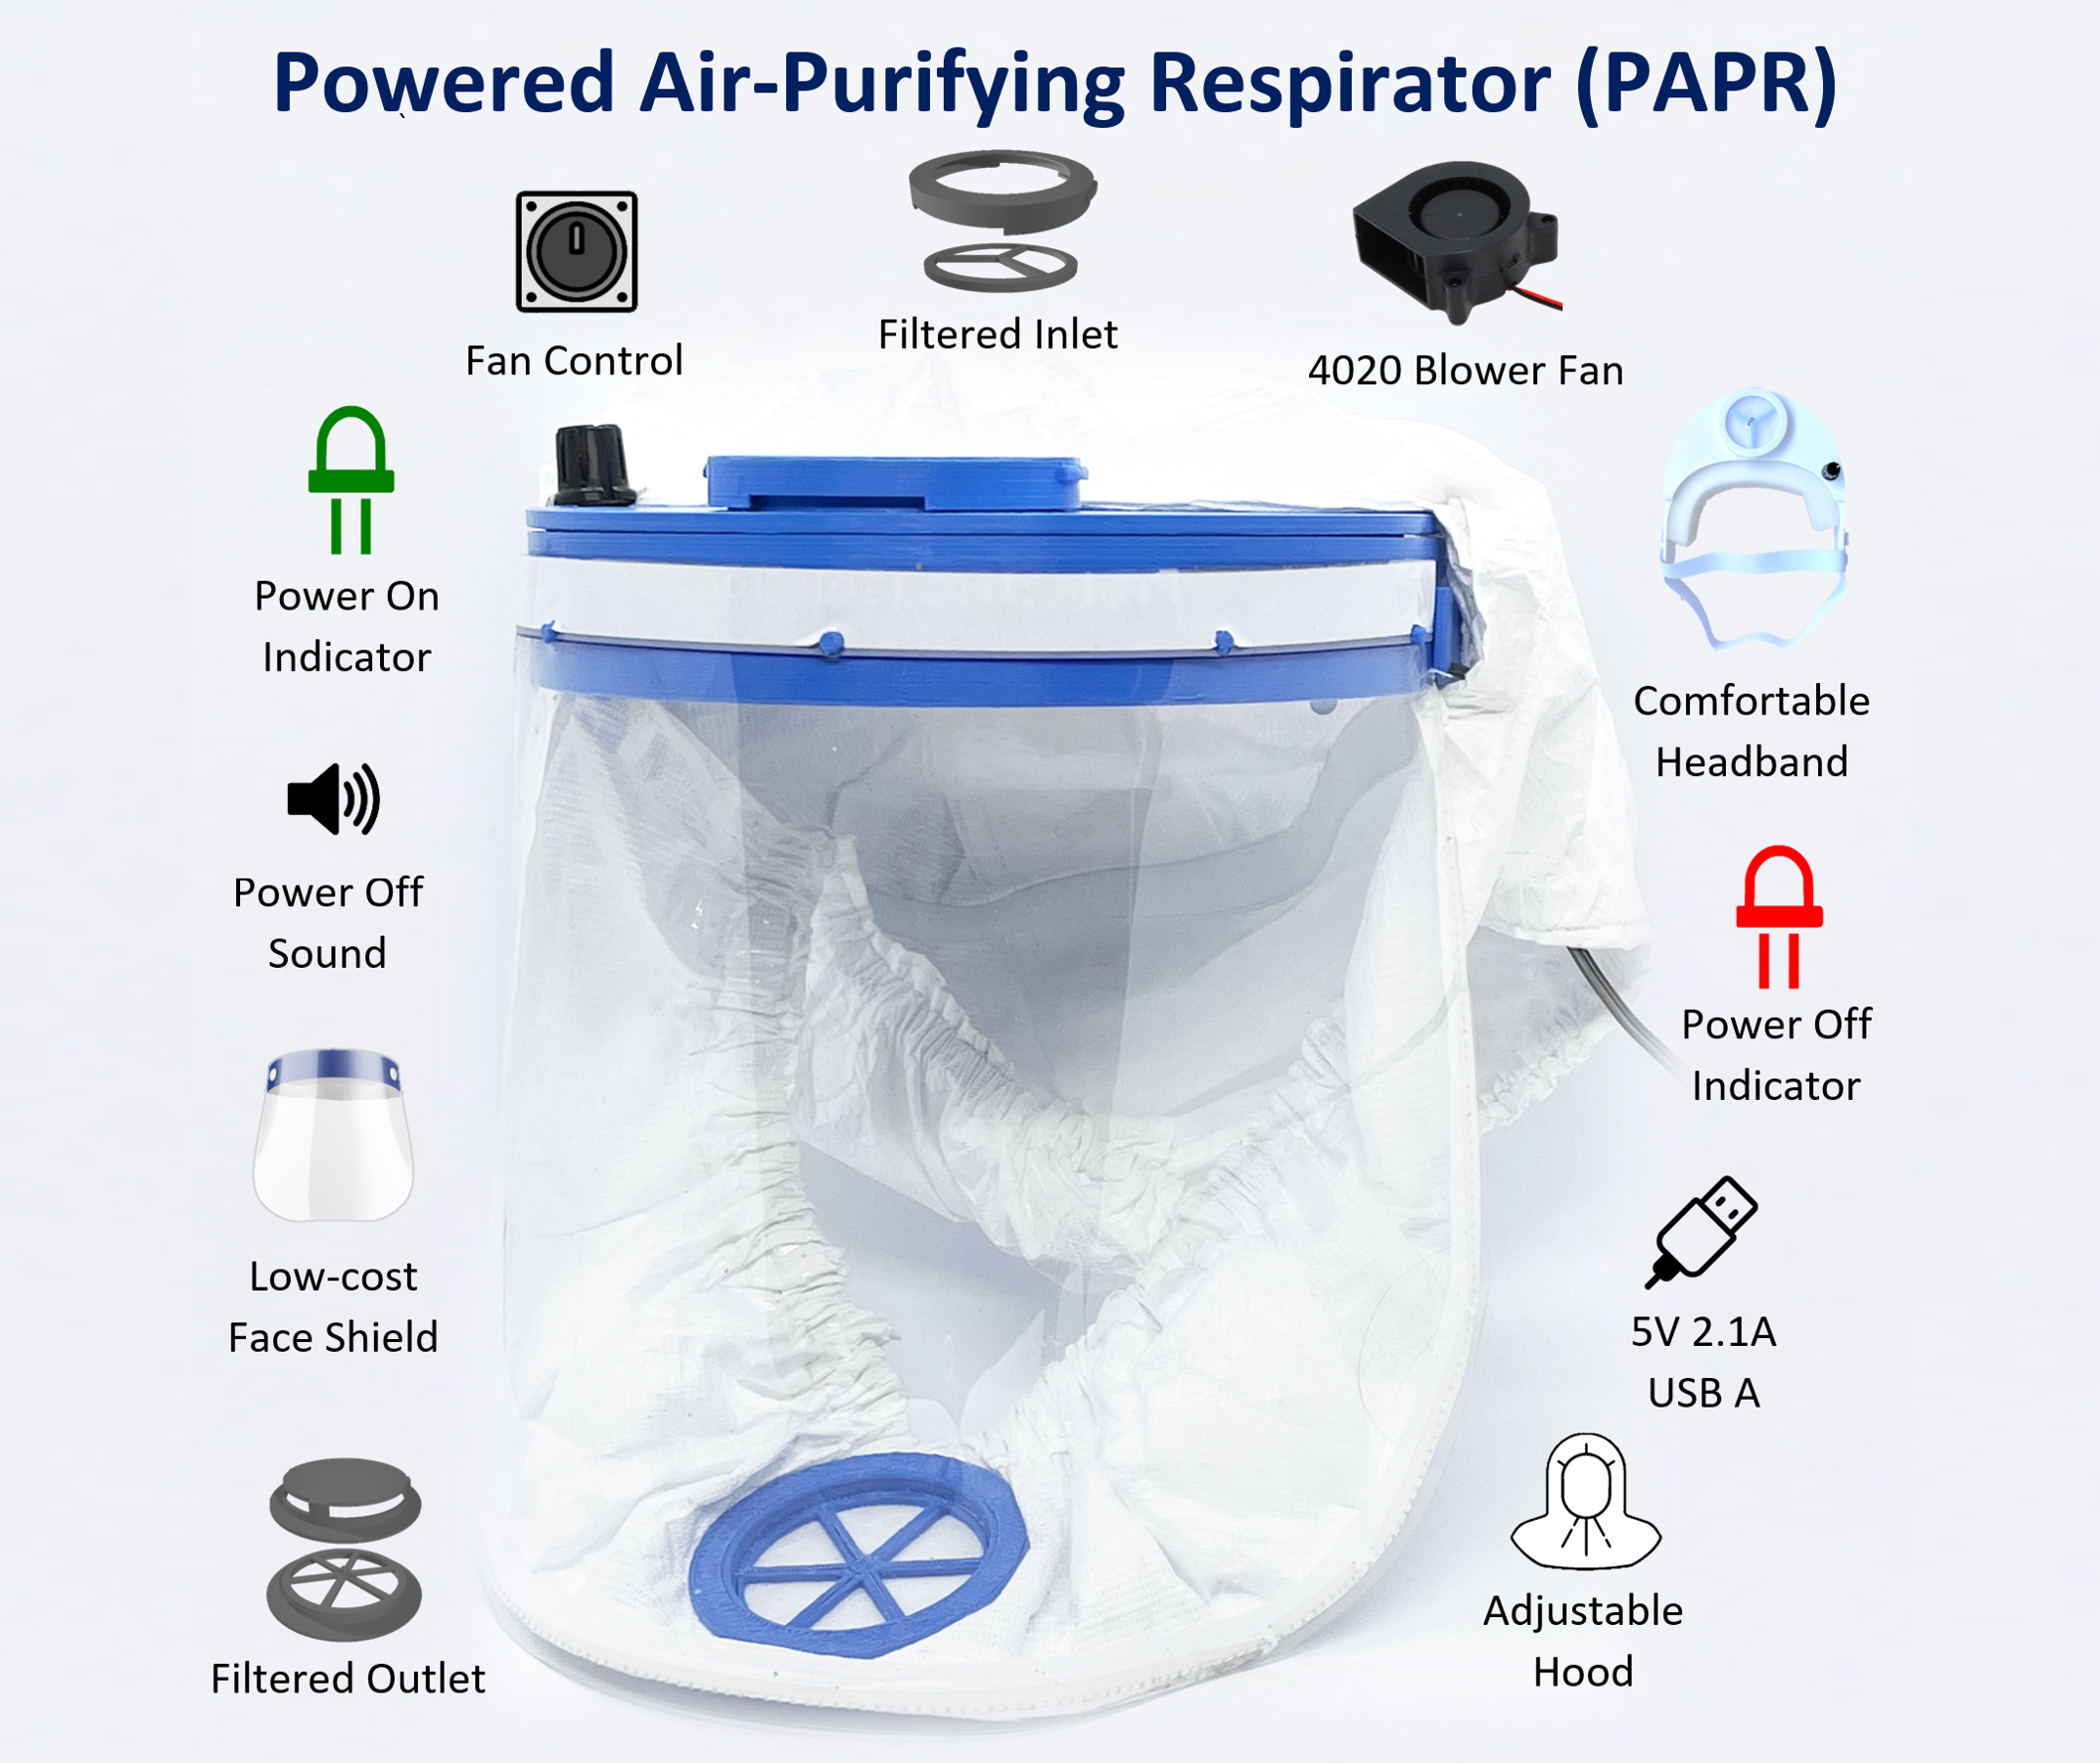 Powered Air-Purifying Respirator (PAPR)